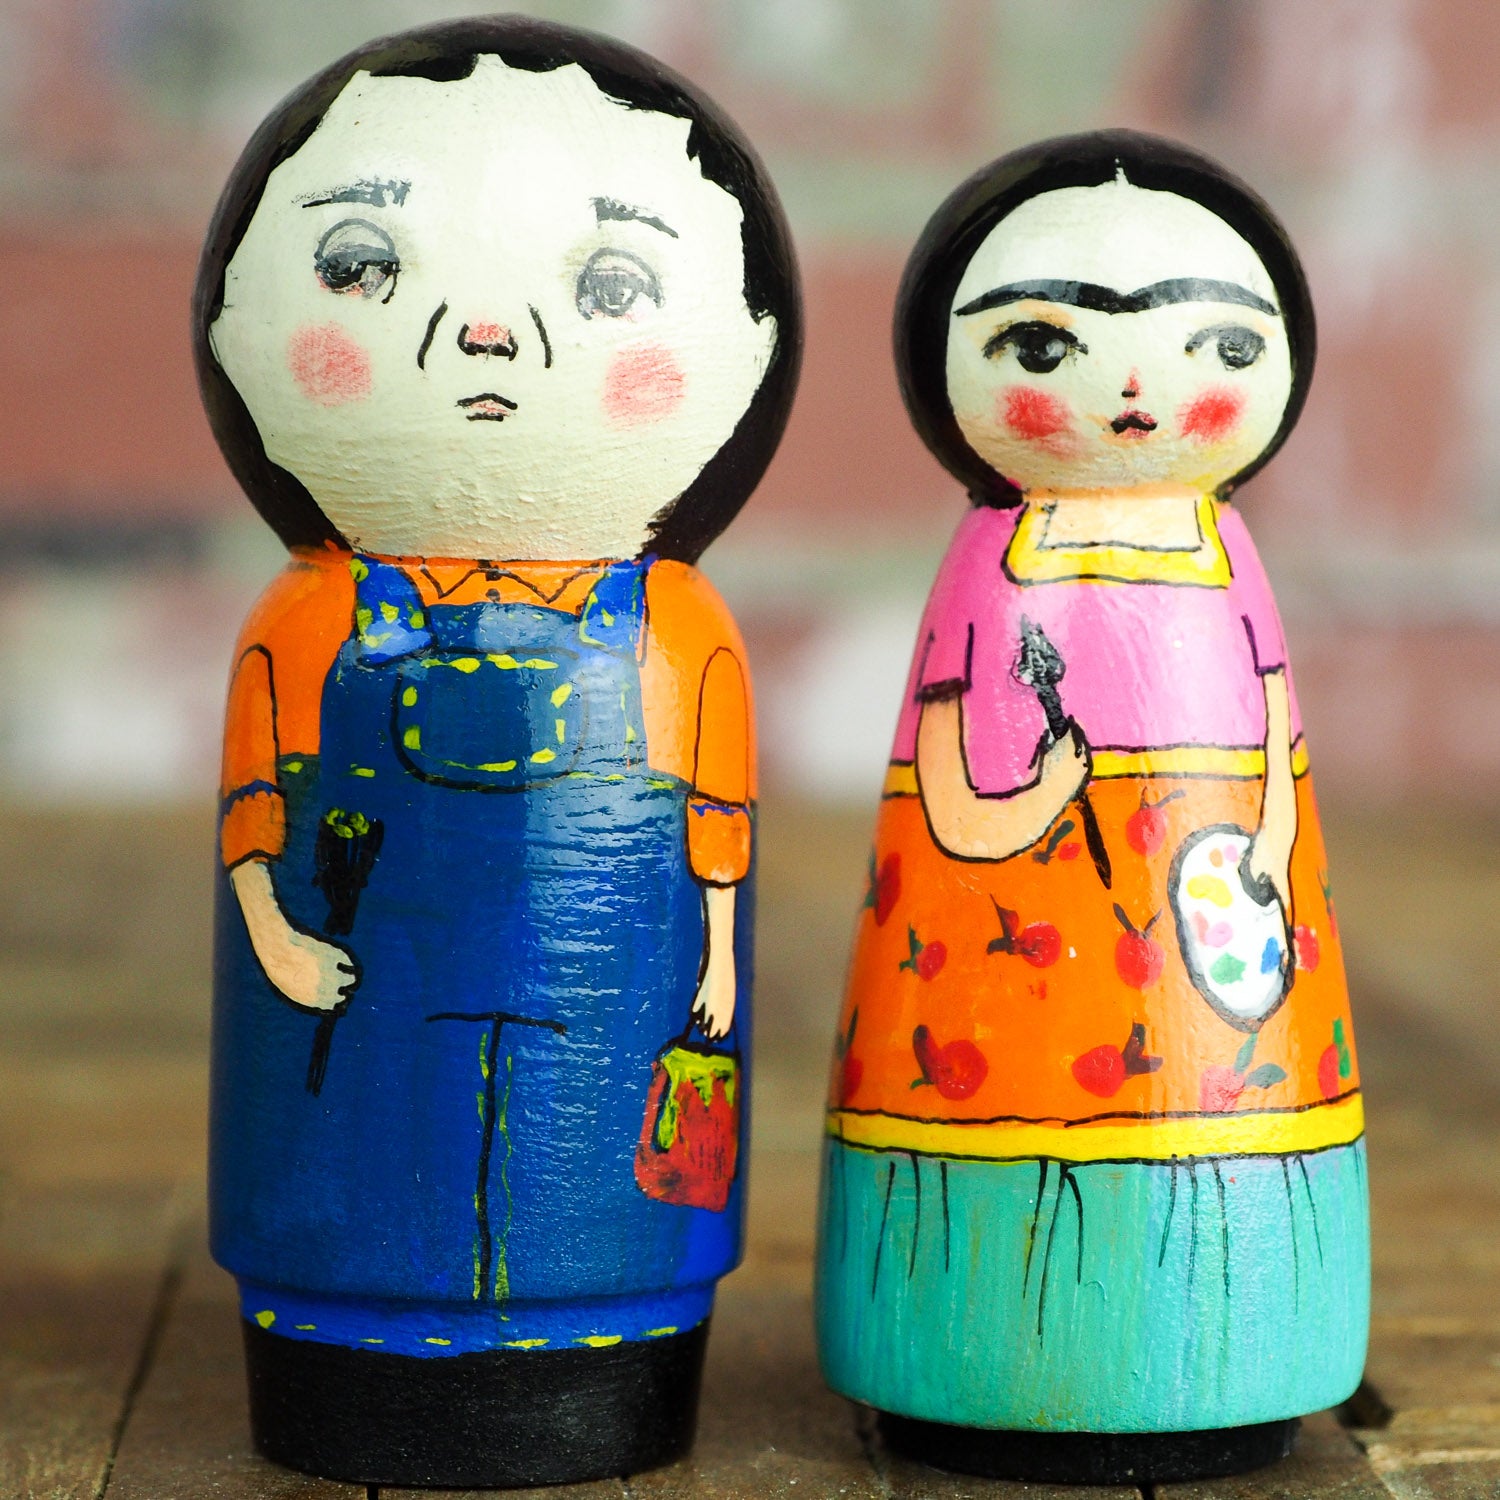 Frida y Diego - Wood Kokeshi art dolls by Danita, Miniature Dolls by Danita Art